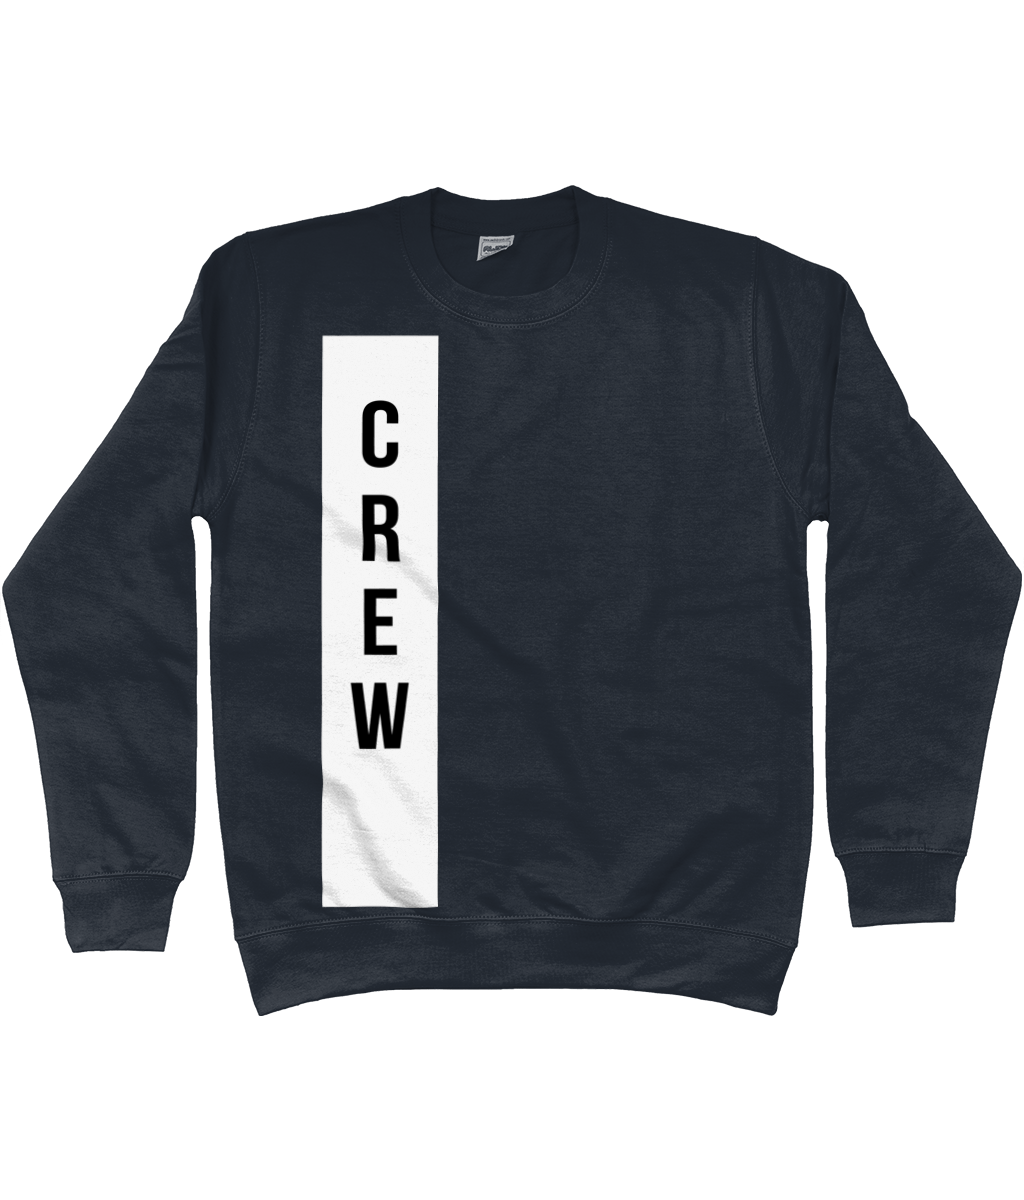 Crew Sweatshirt French Navy